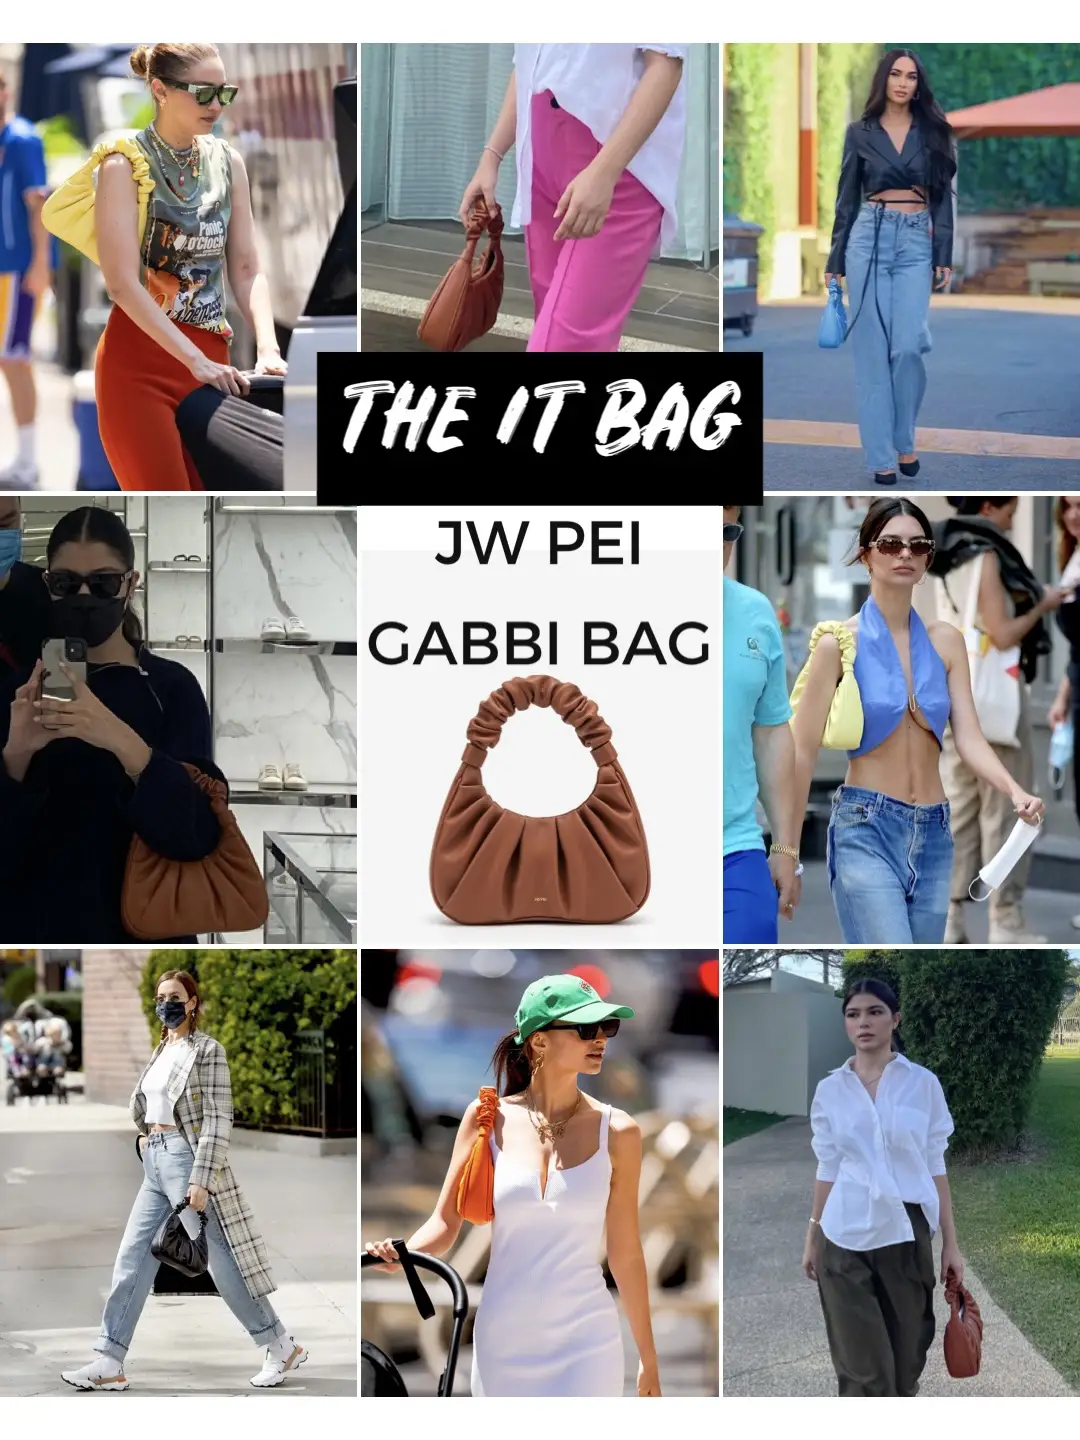 JW Pei Gabbi Bag